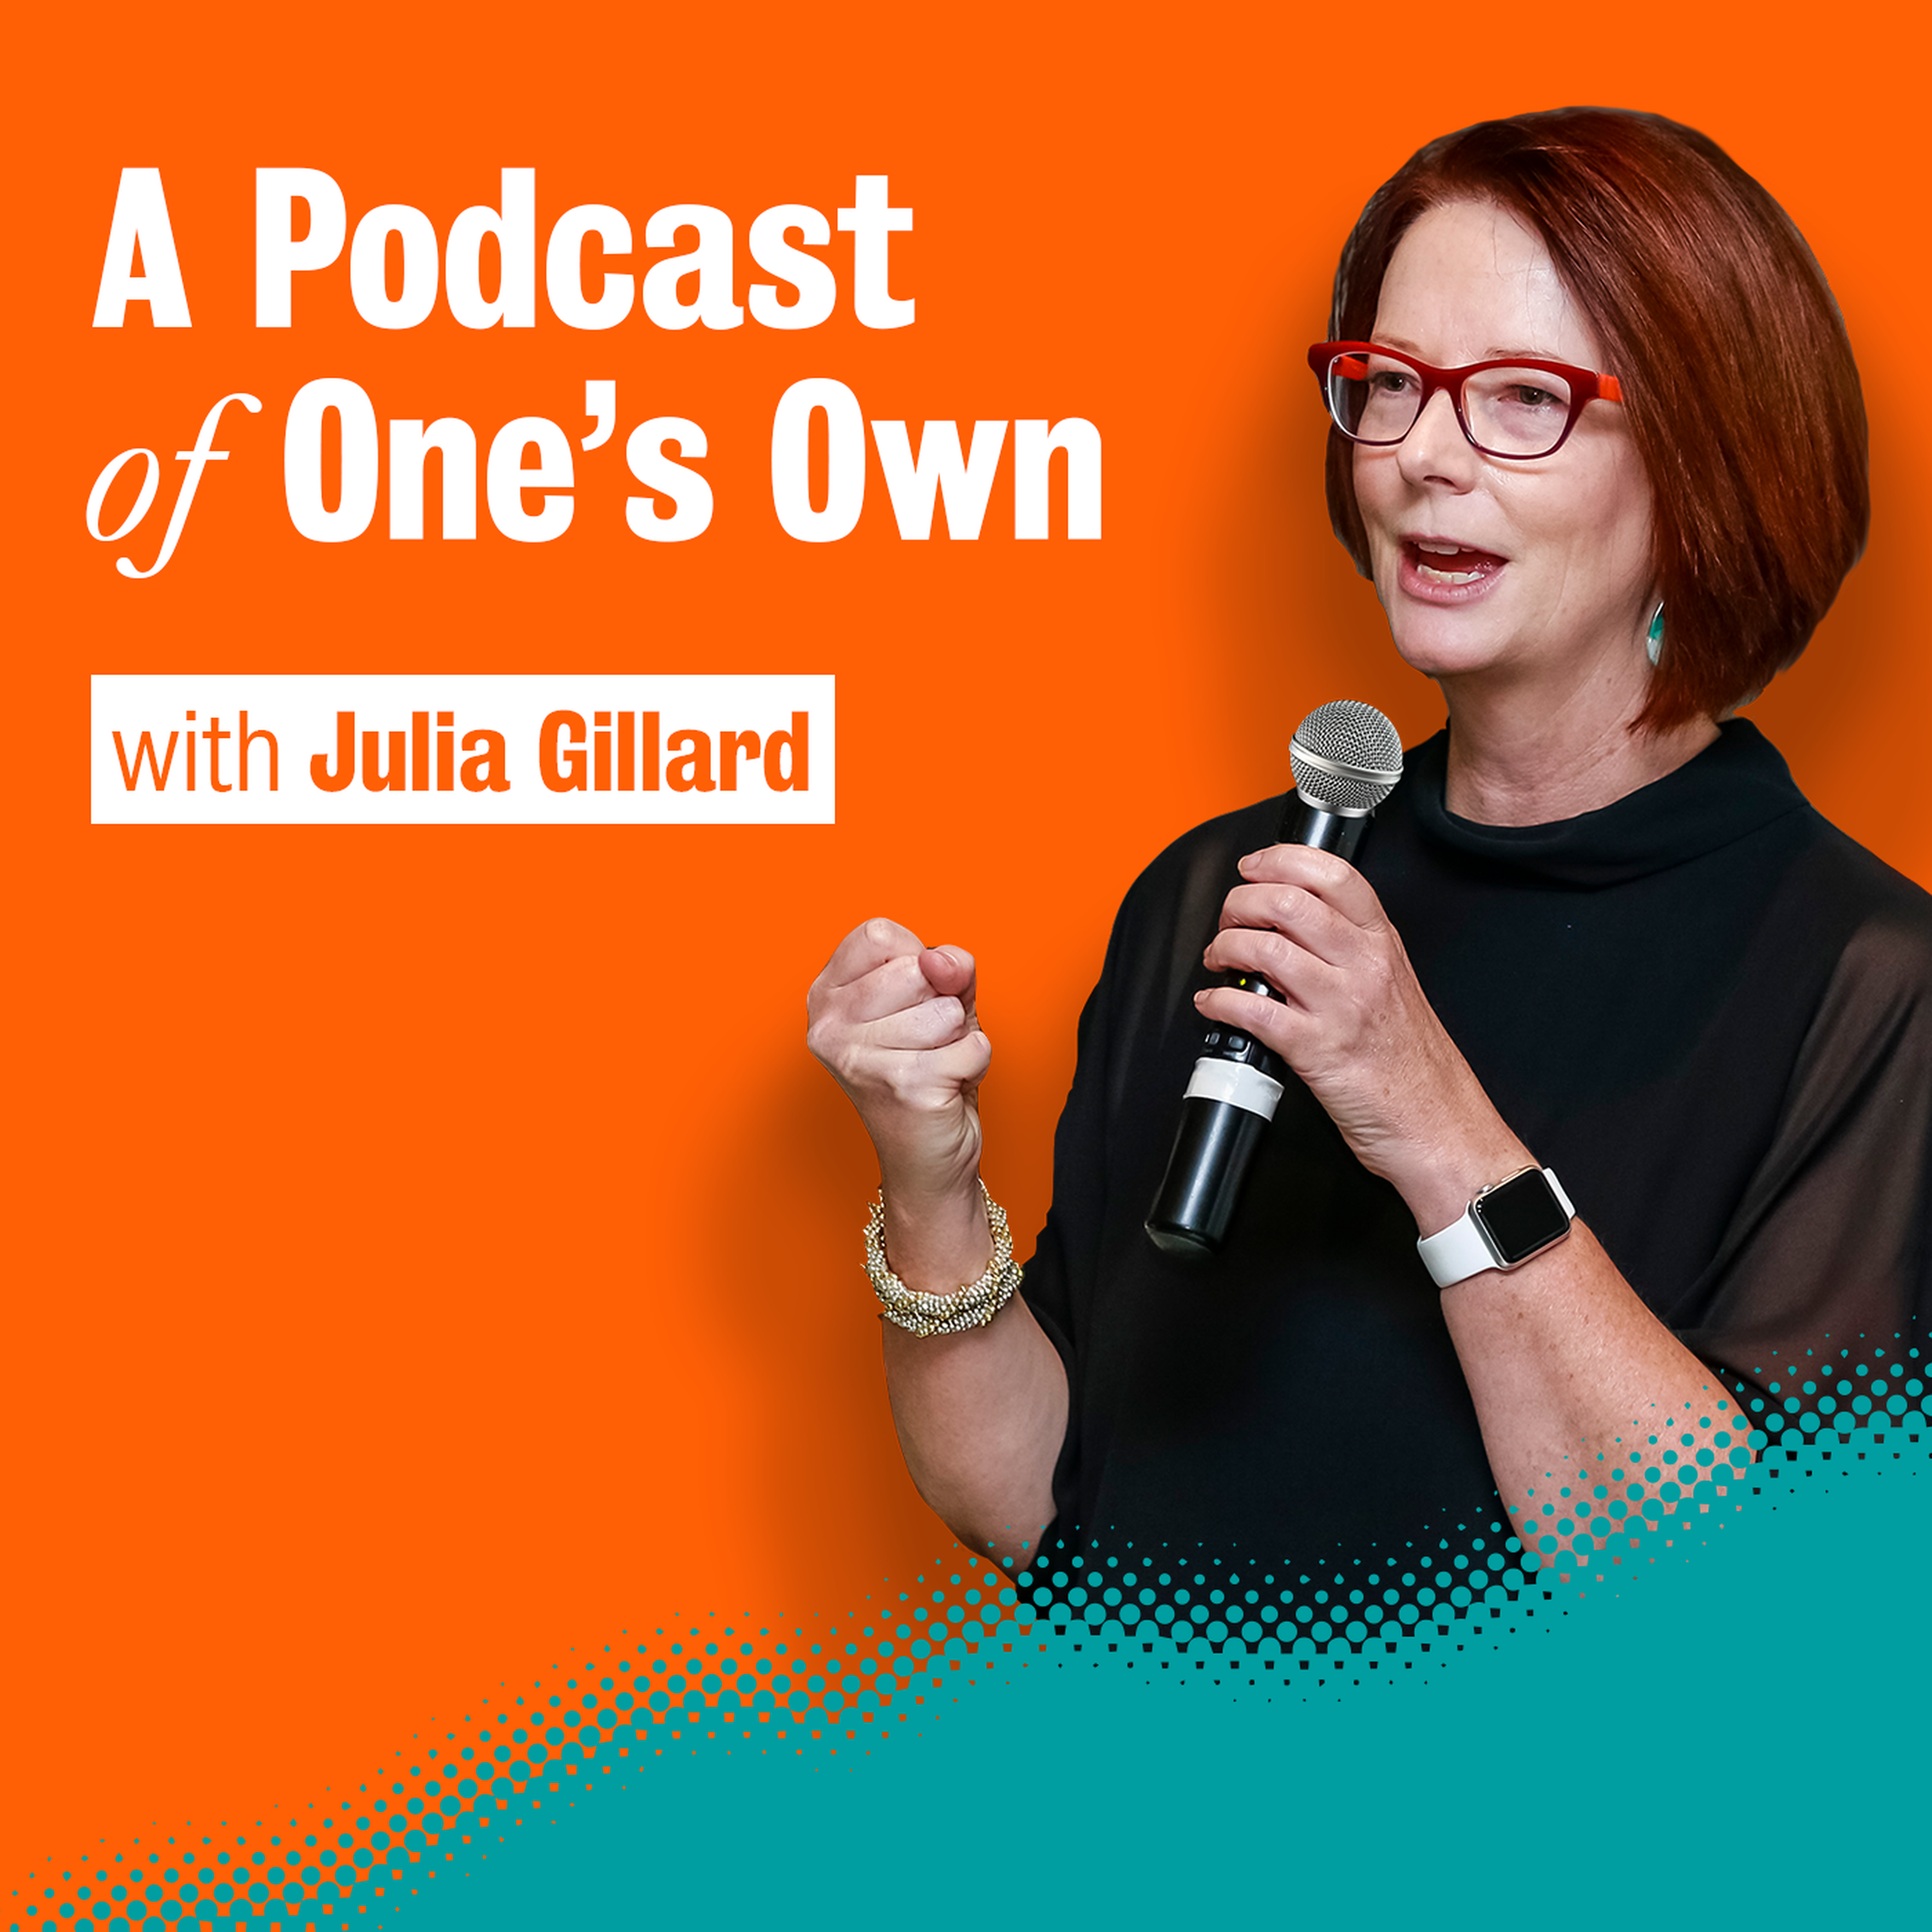 Julia Gillard on her highlights from 2019